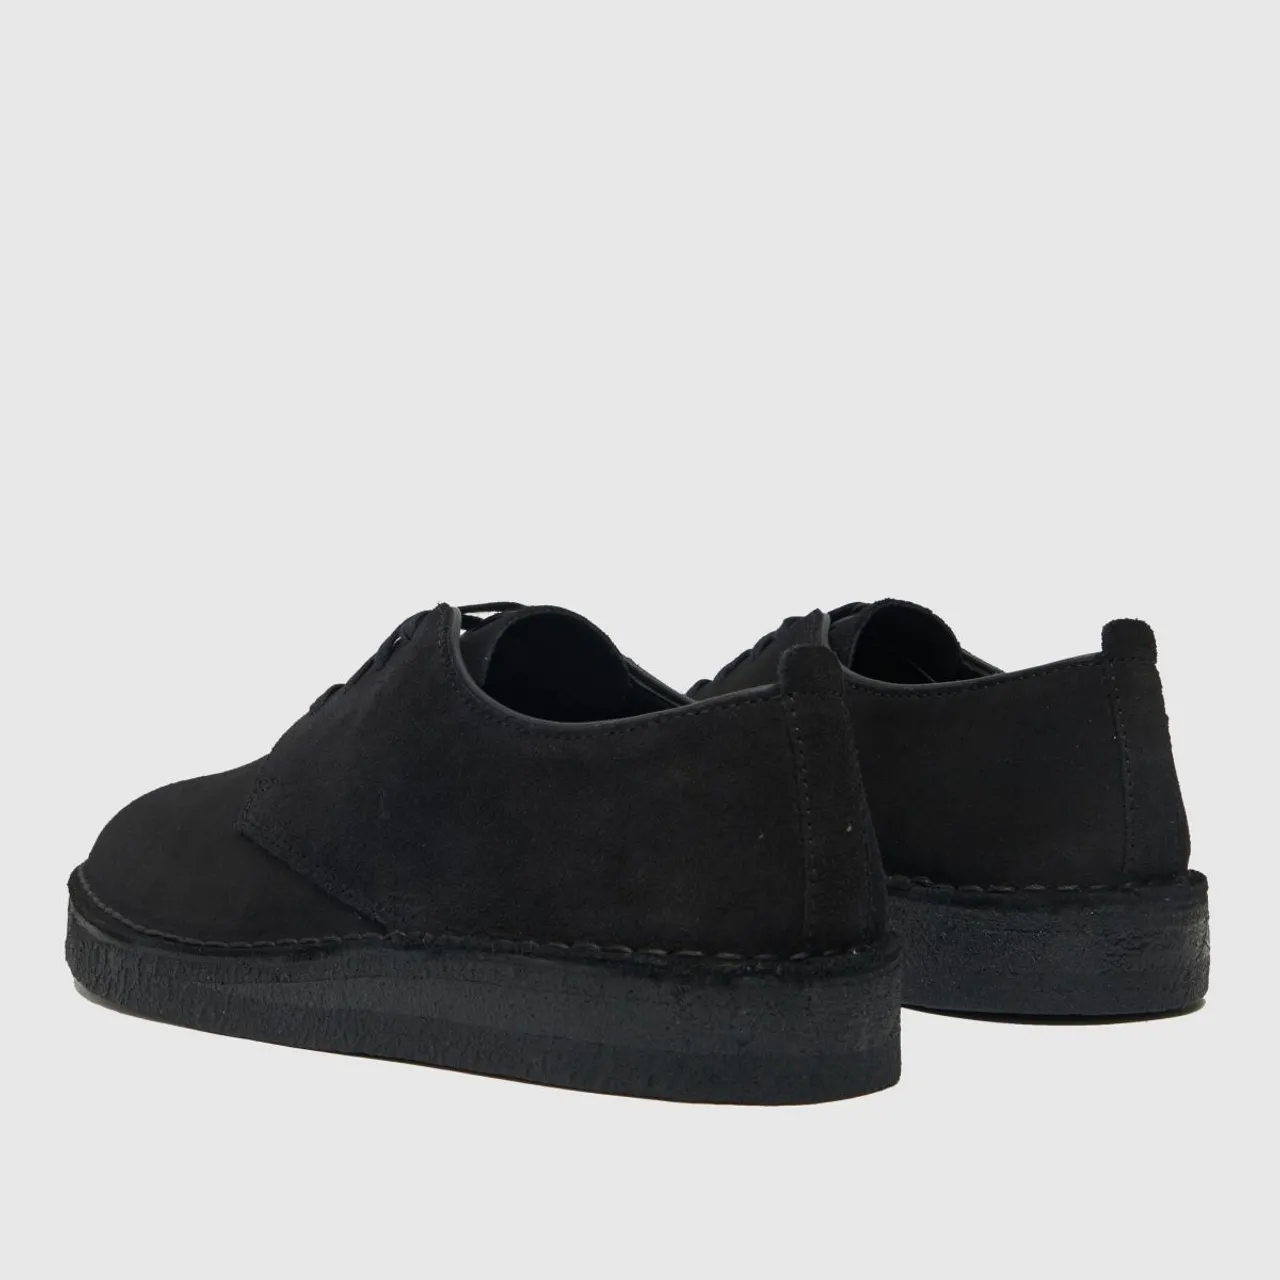 Clarks Originals Coal London Shoes In Black